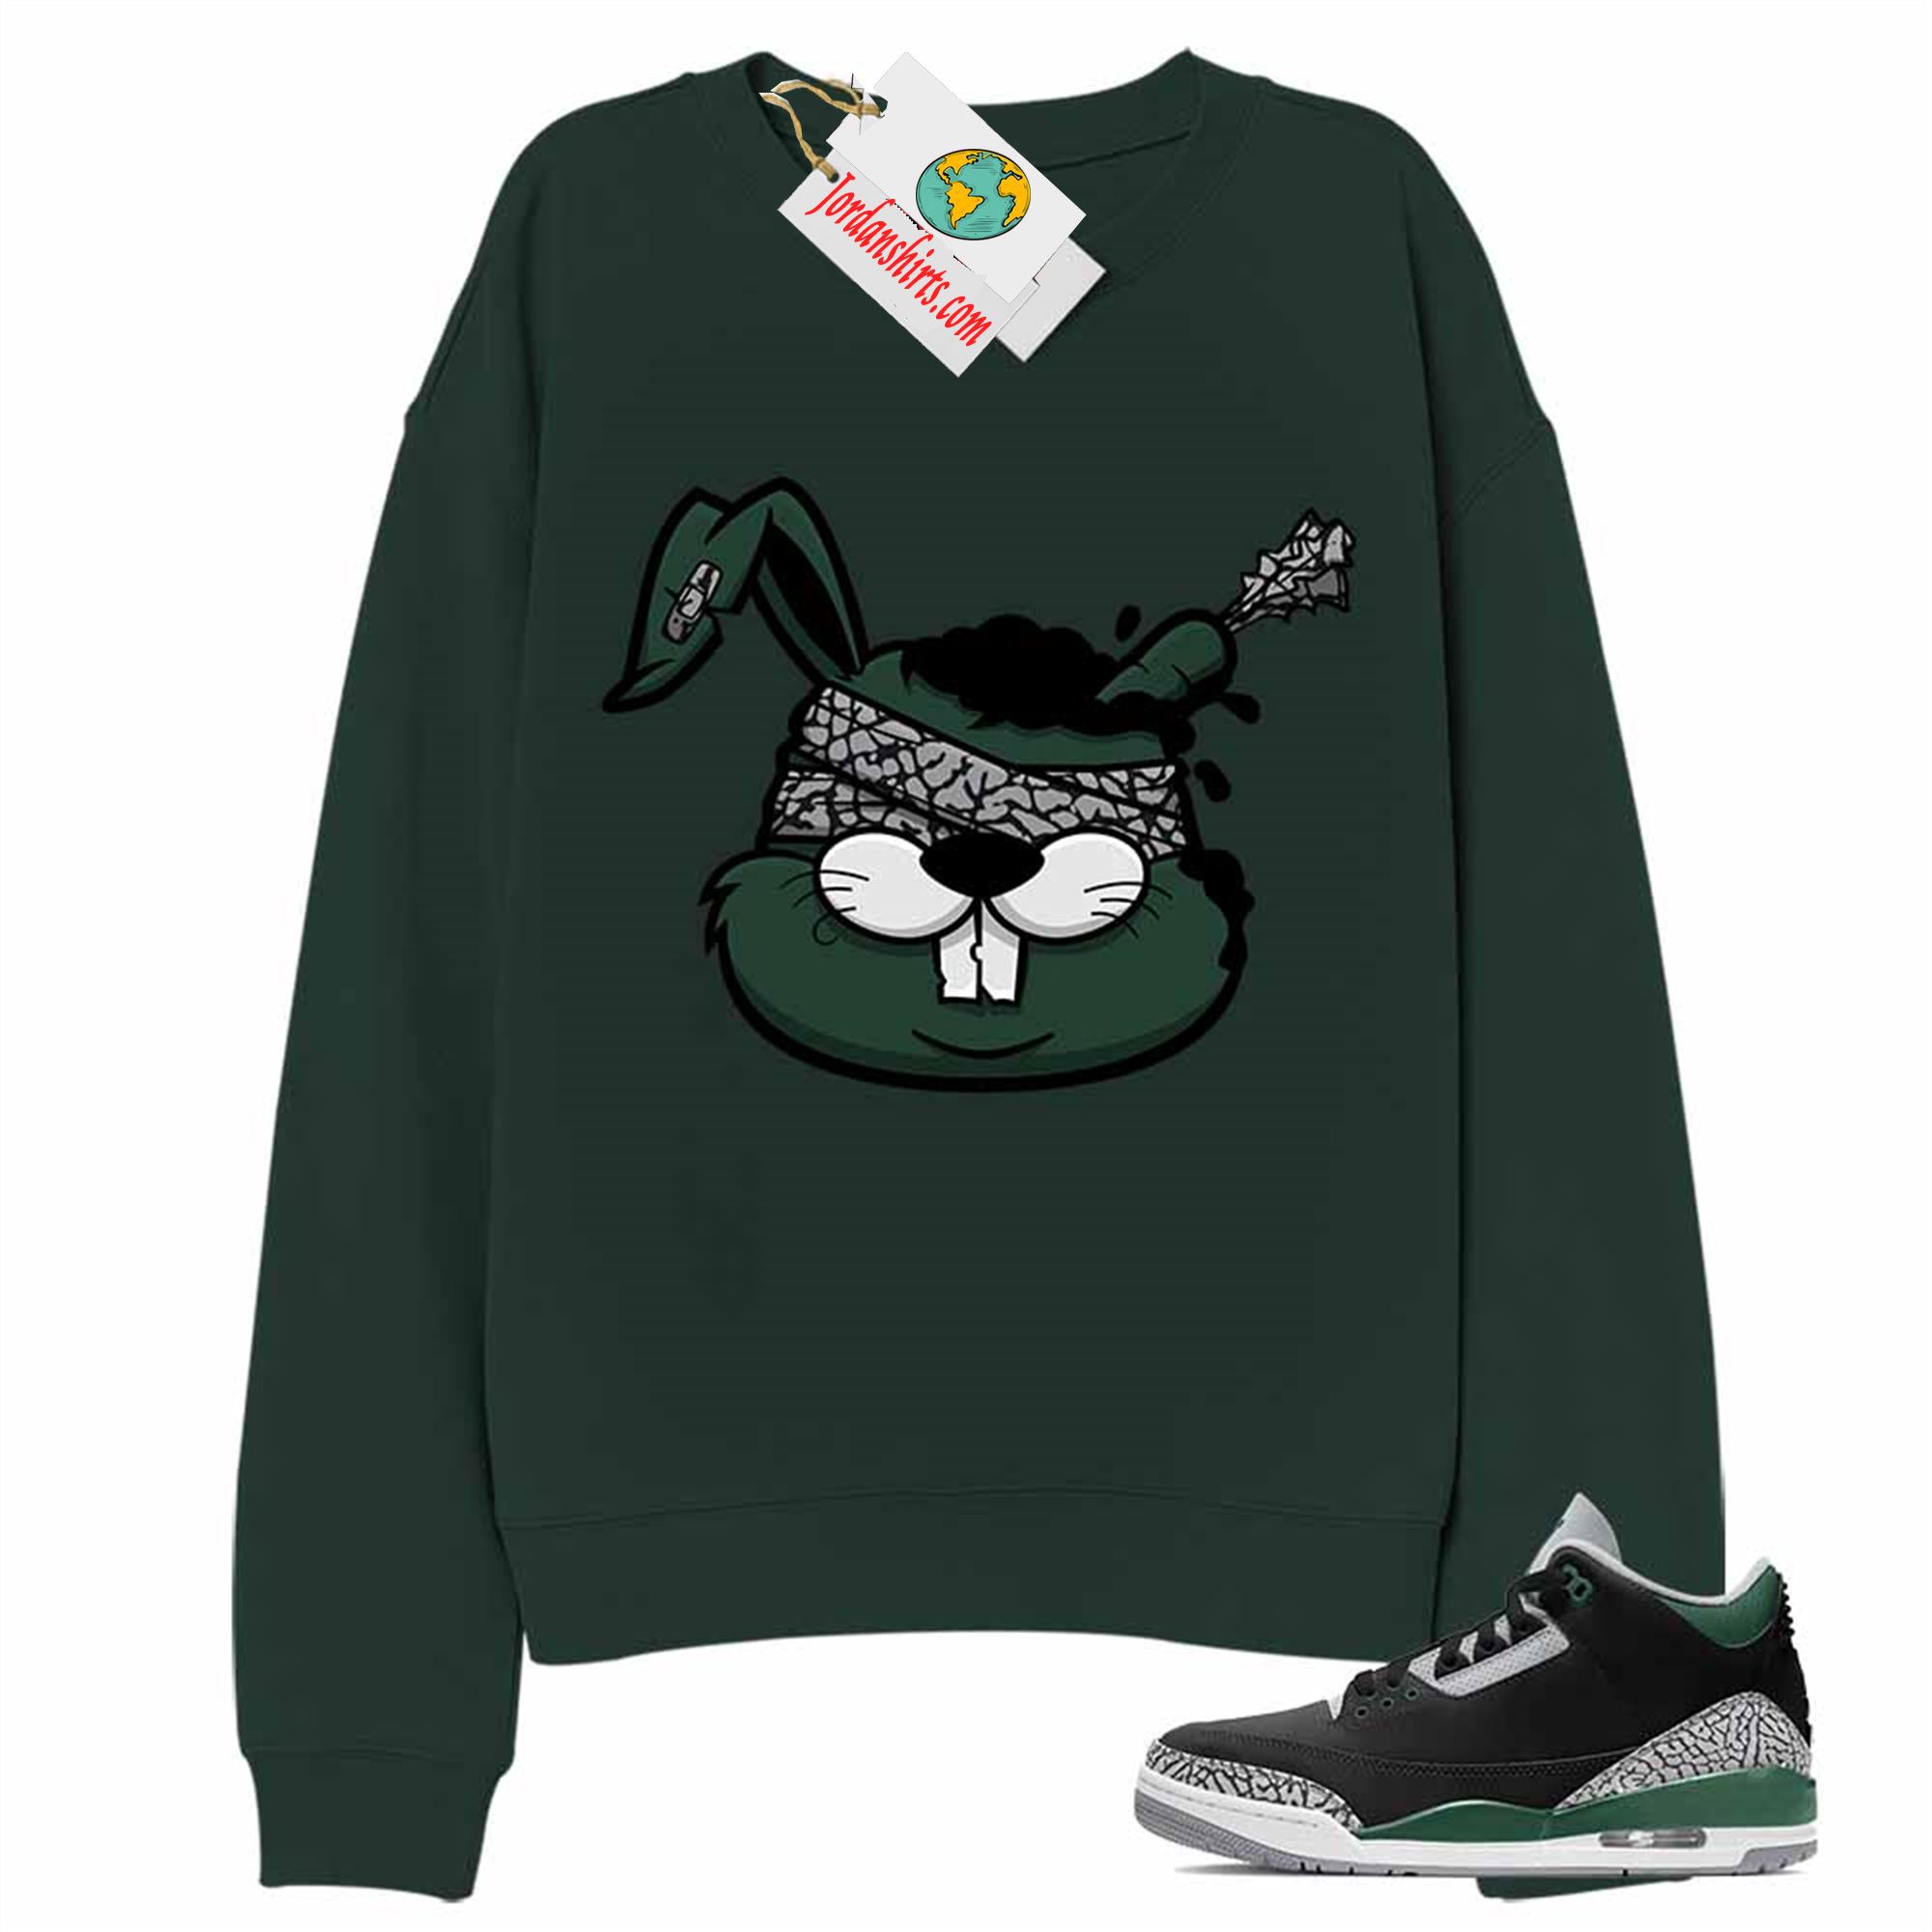 Jordan 3 Sweatshirt, Zombie Bunny Forest Green Air Jordan 3 Pine Green 3s Full Size Up To 5xl